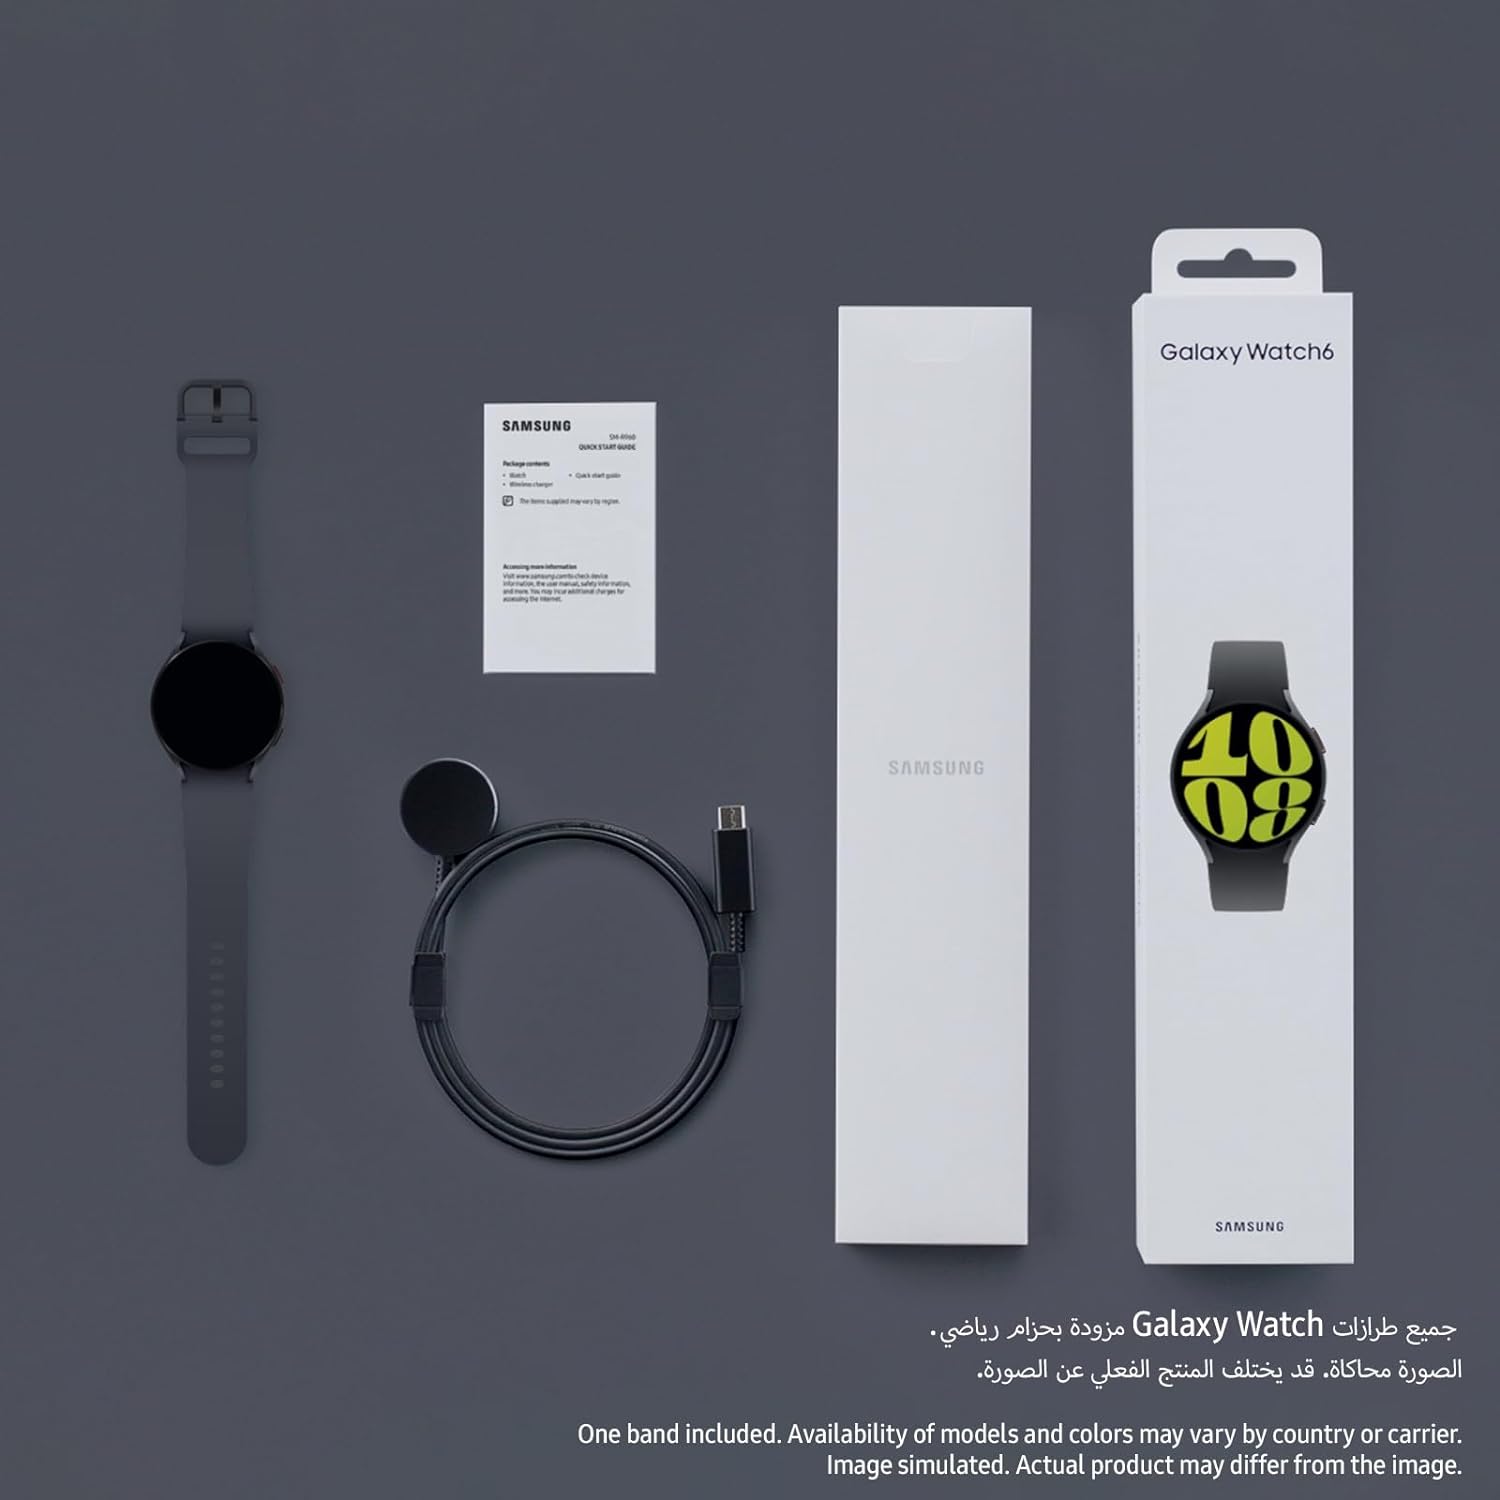 Samsung Galaxy Watch6 - Sleep insights, body composition sensor, heart monitoring, borderless screen, customizable watch faces. 8806095049380